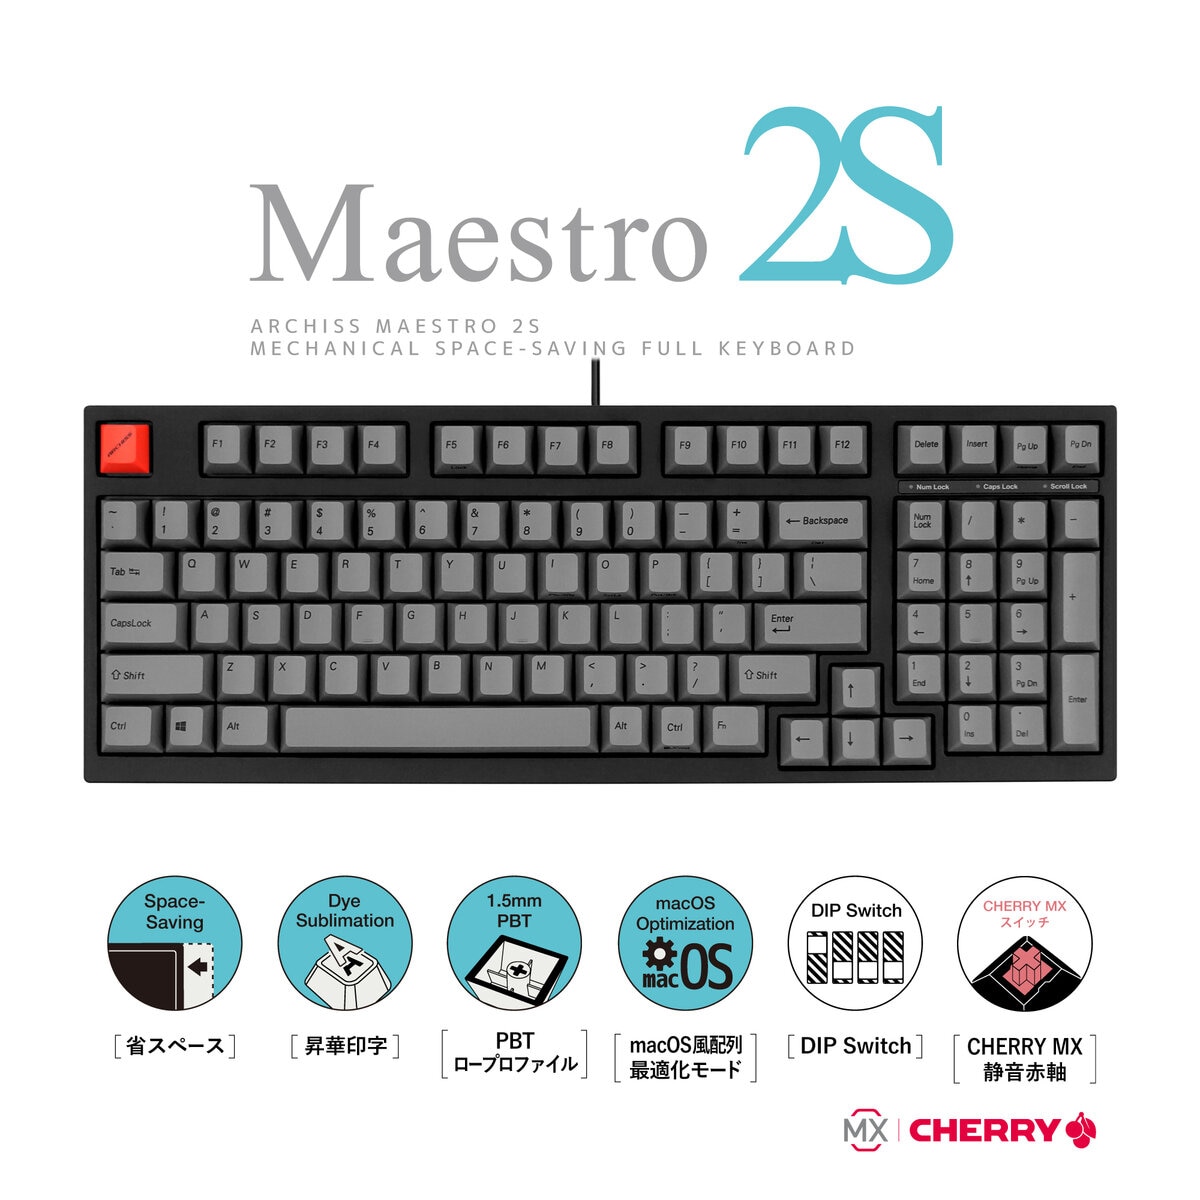 ARCHISS Maestro 2S キーボード / 英語配列 Cherry MX 静音赤軸 / AS-KBM98/SRGB